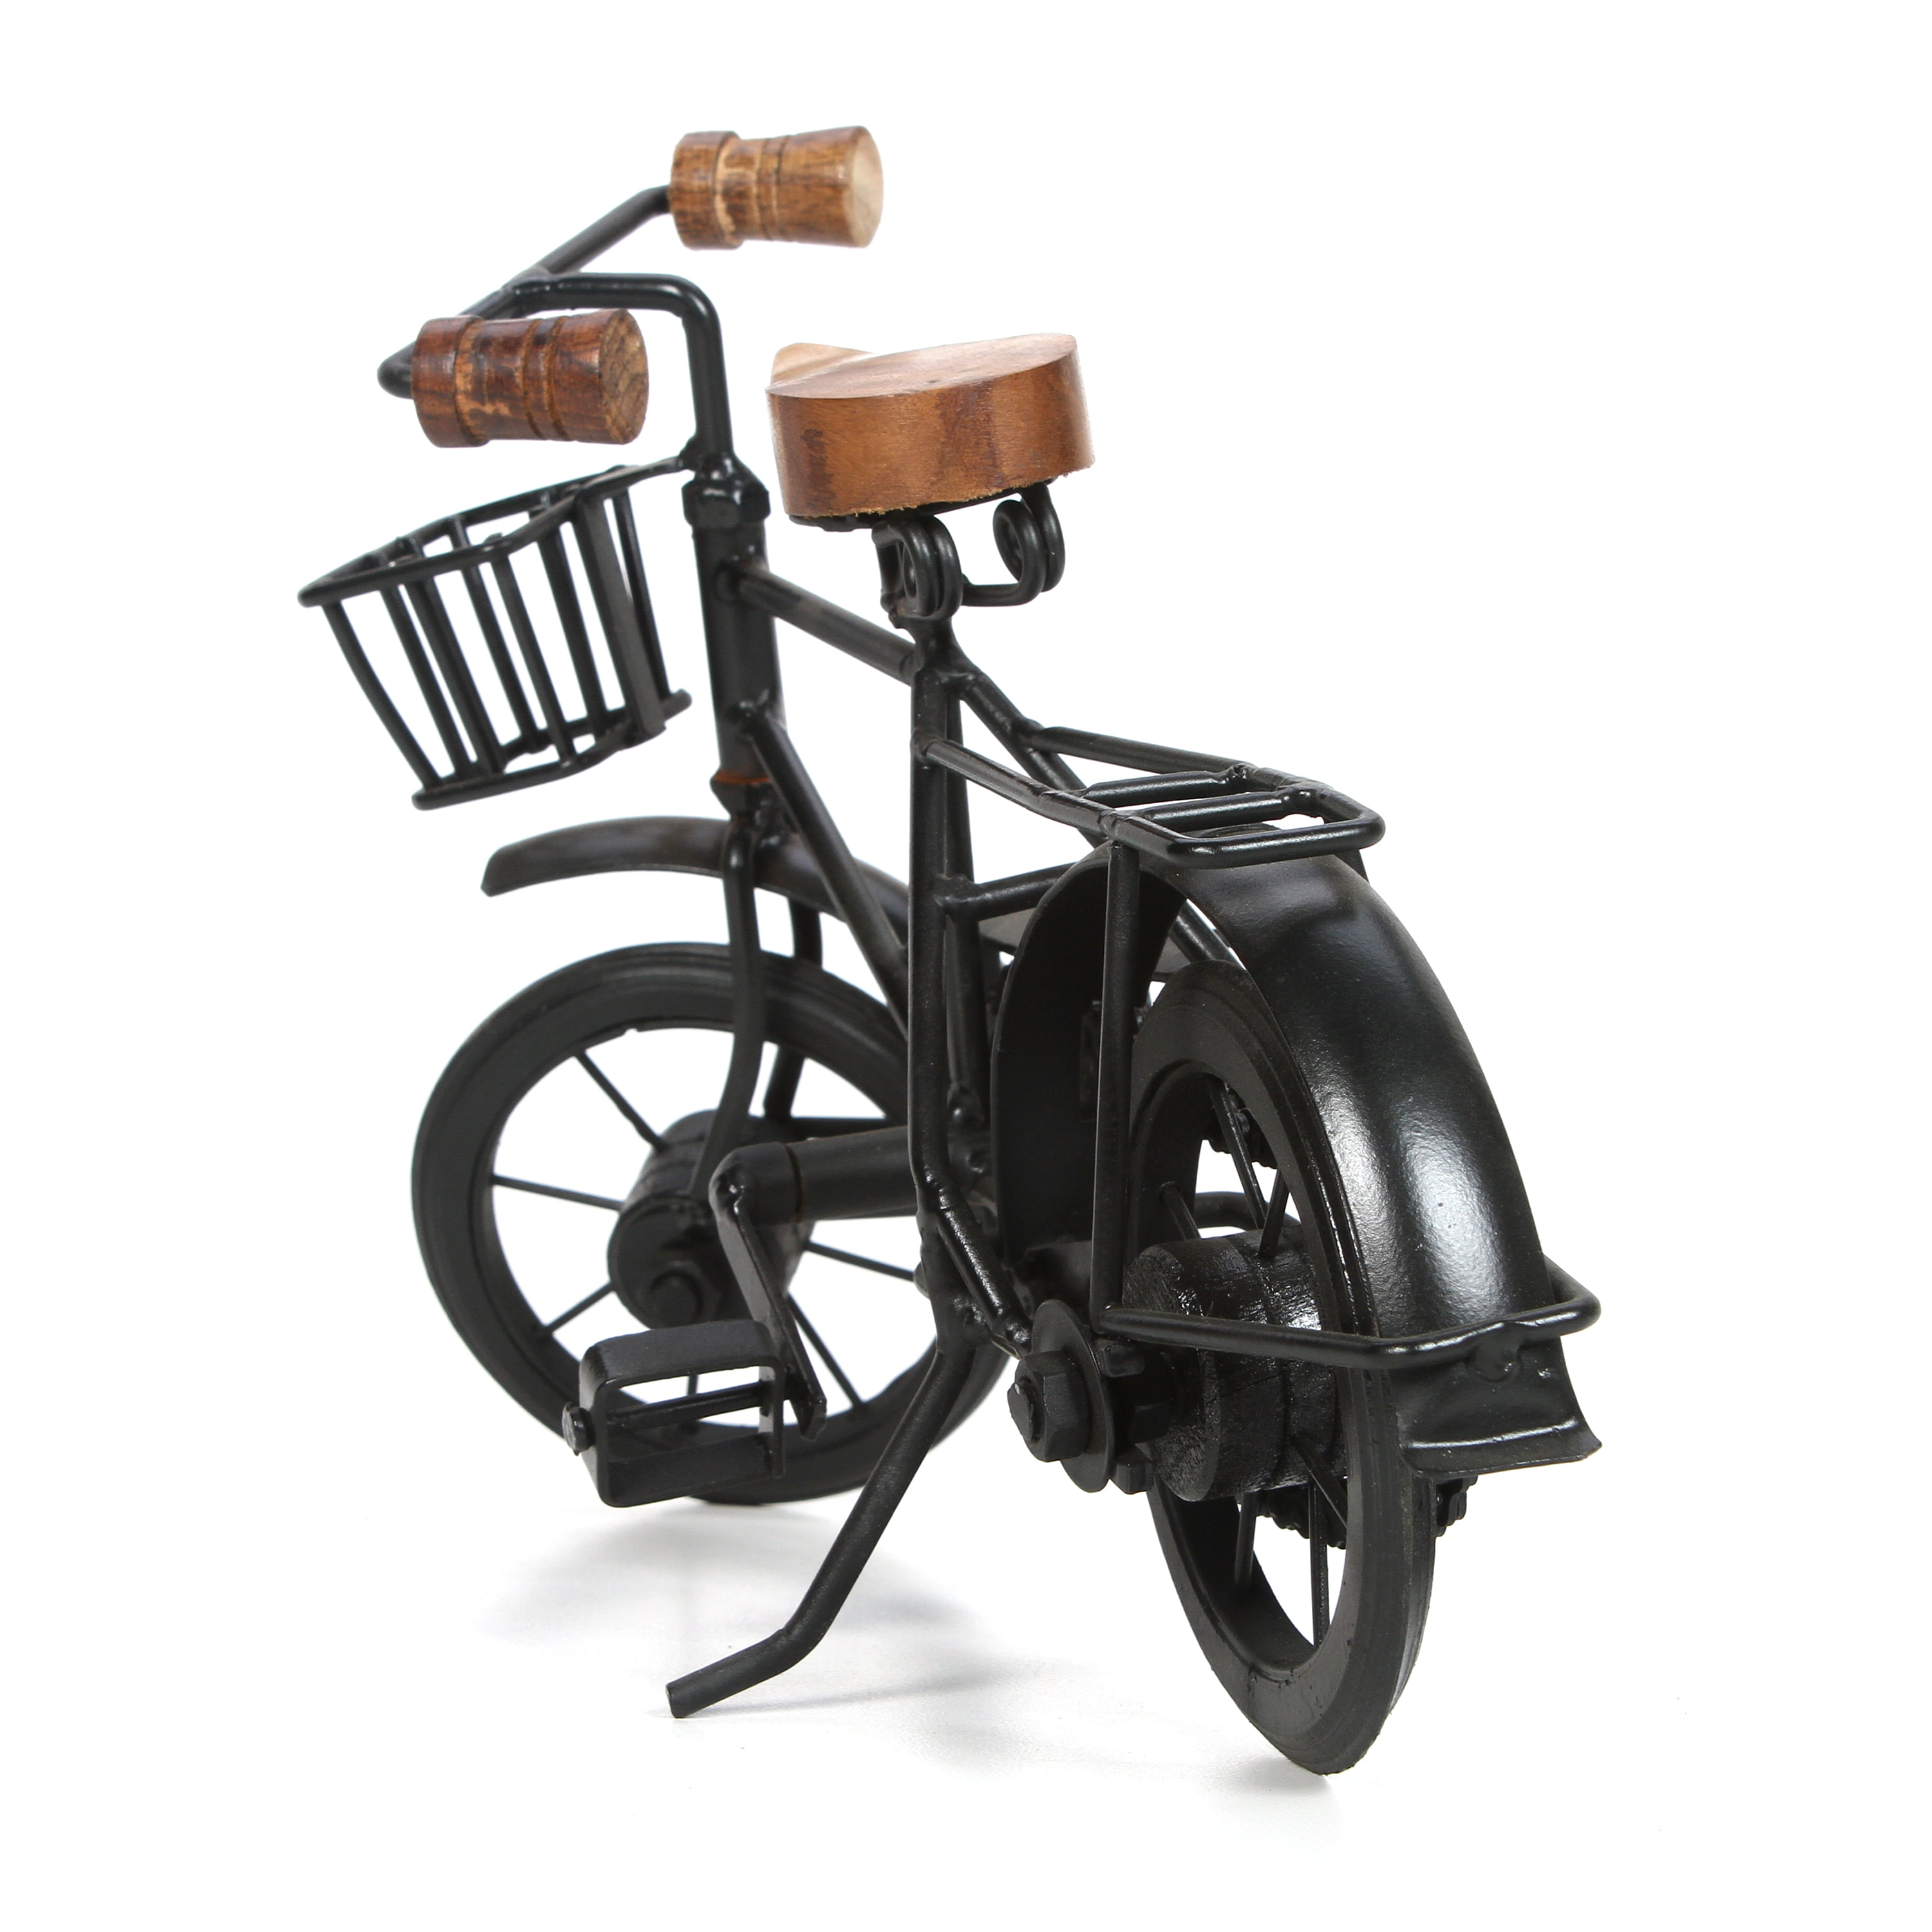 Wood/Metal Indoor/Outdoor Decorative Bicycle With Basket-2 Designs to Choose 